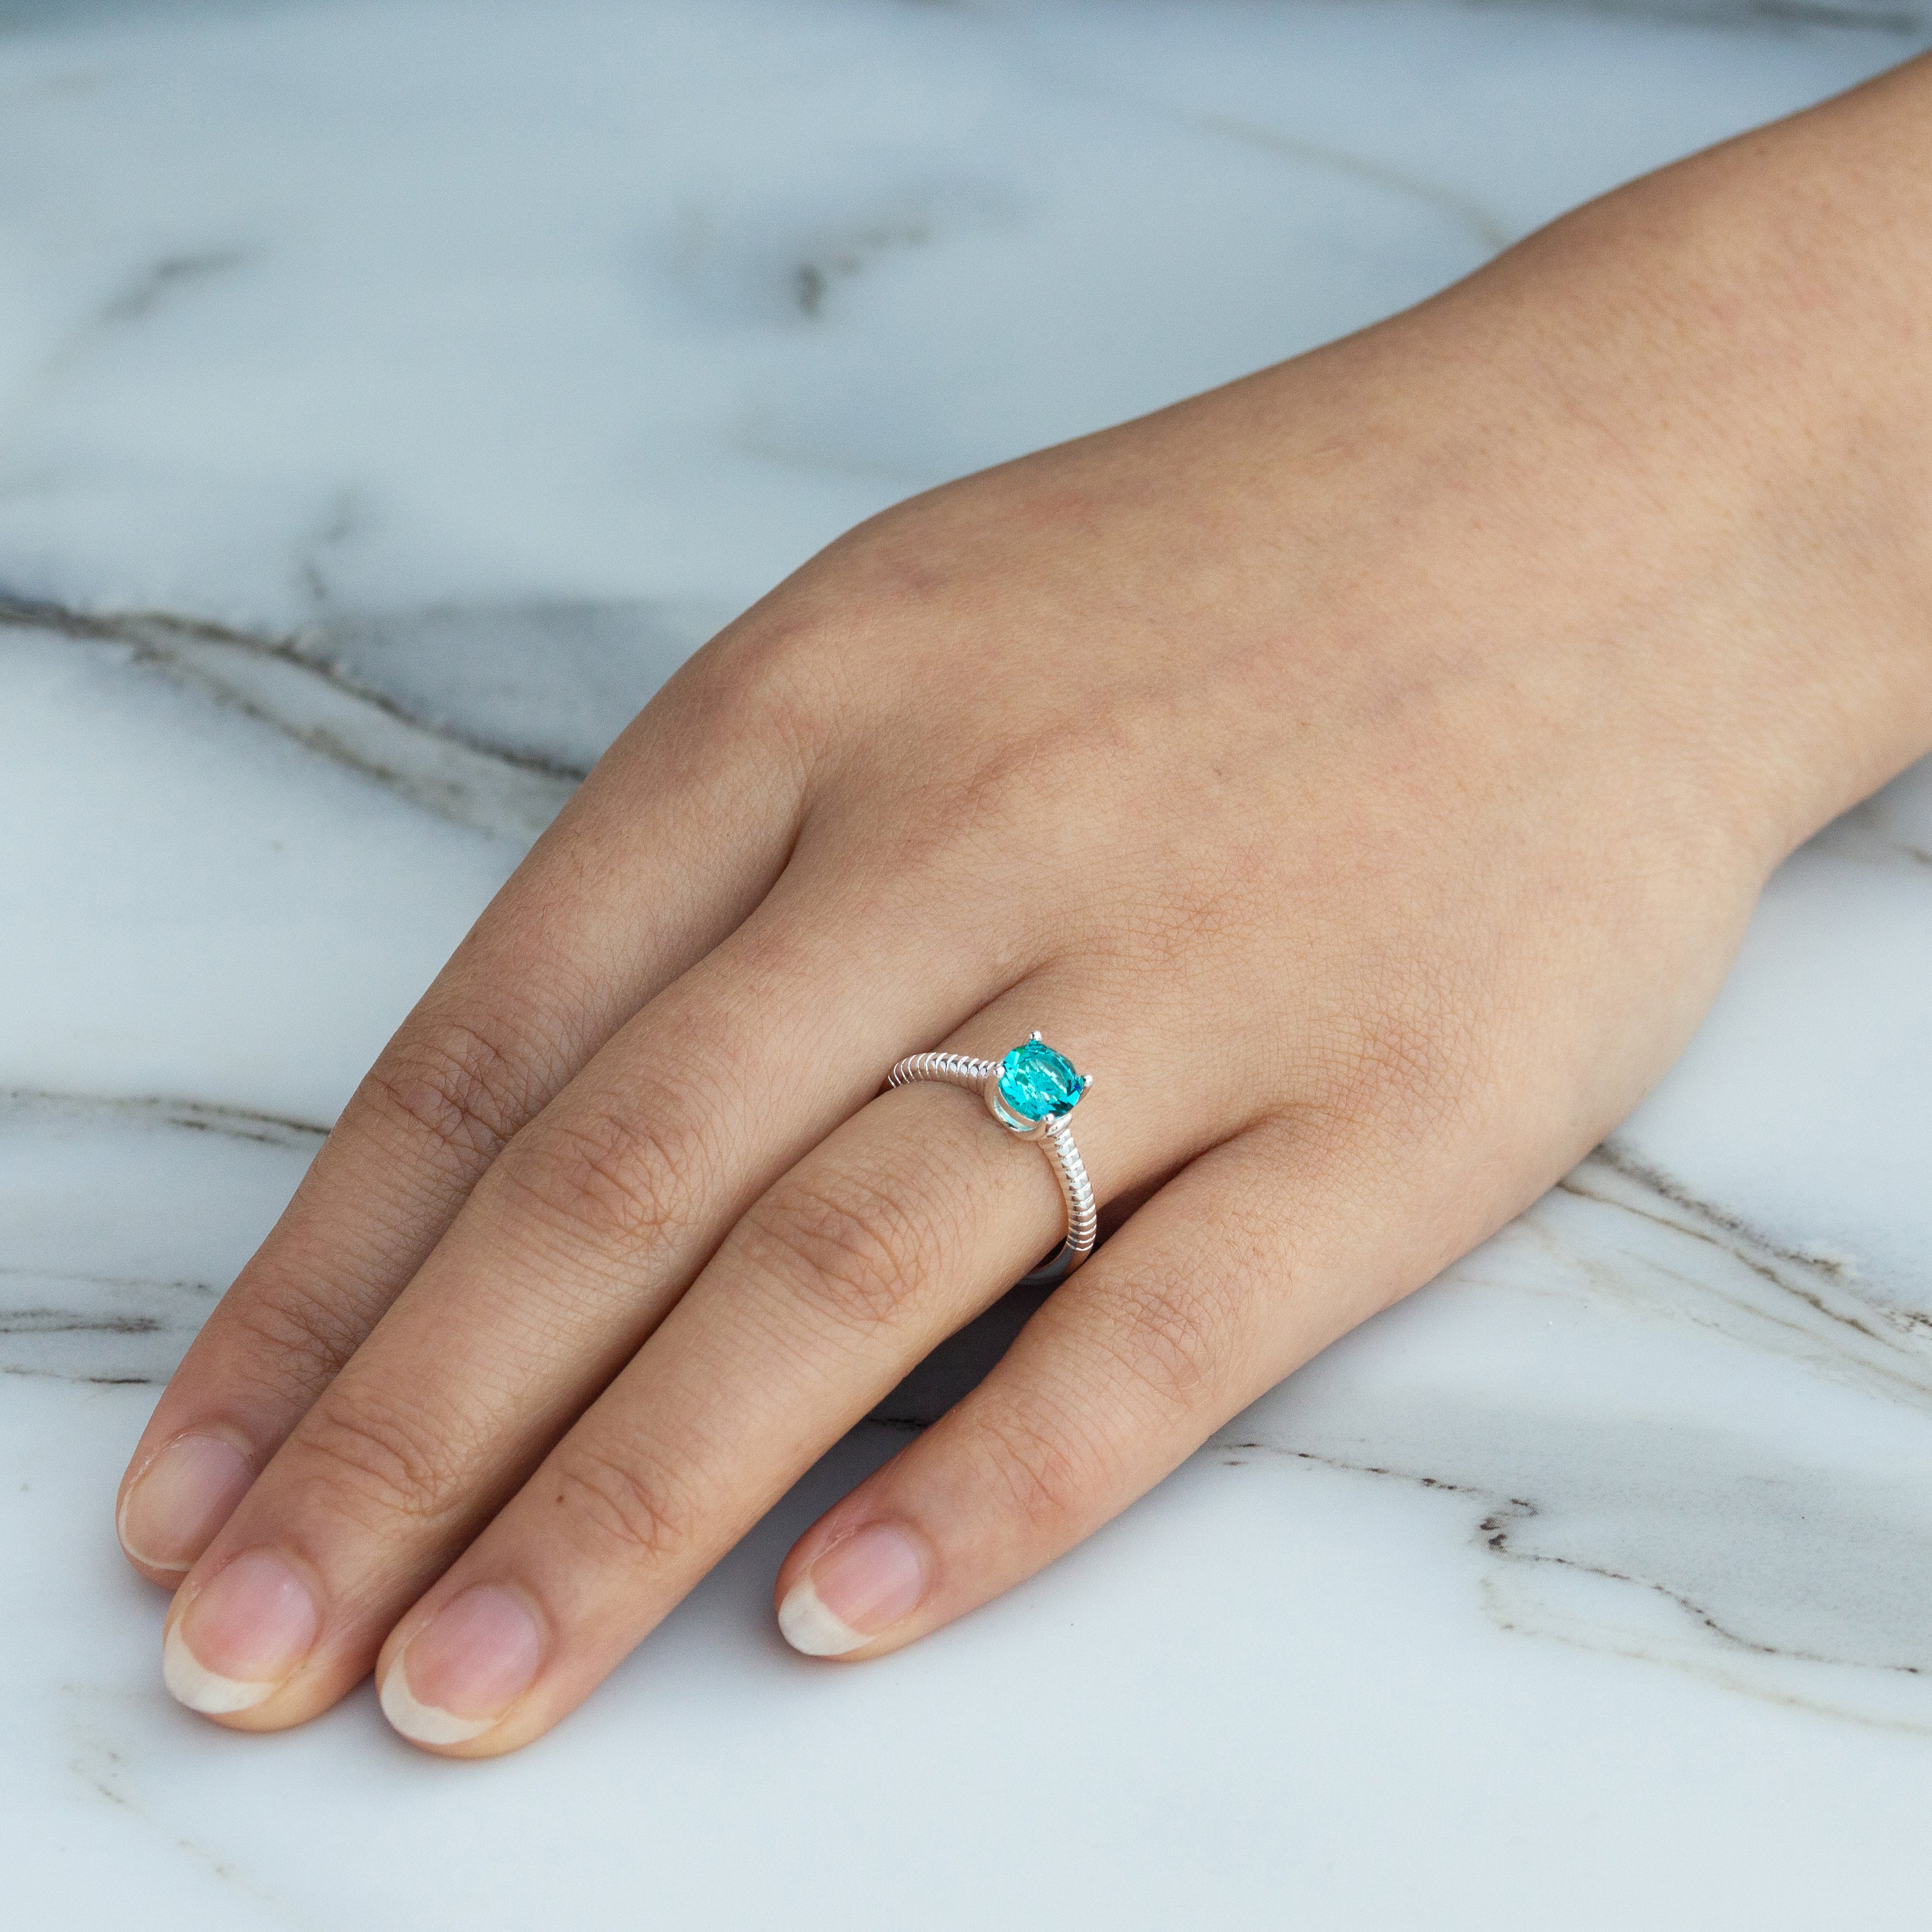 December (Blue Topaz) Adjustable Birthstone Ring Created with Zircondia® Crystals